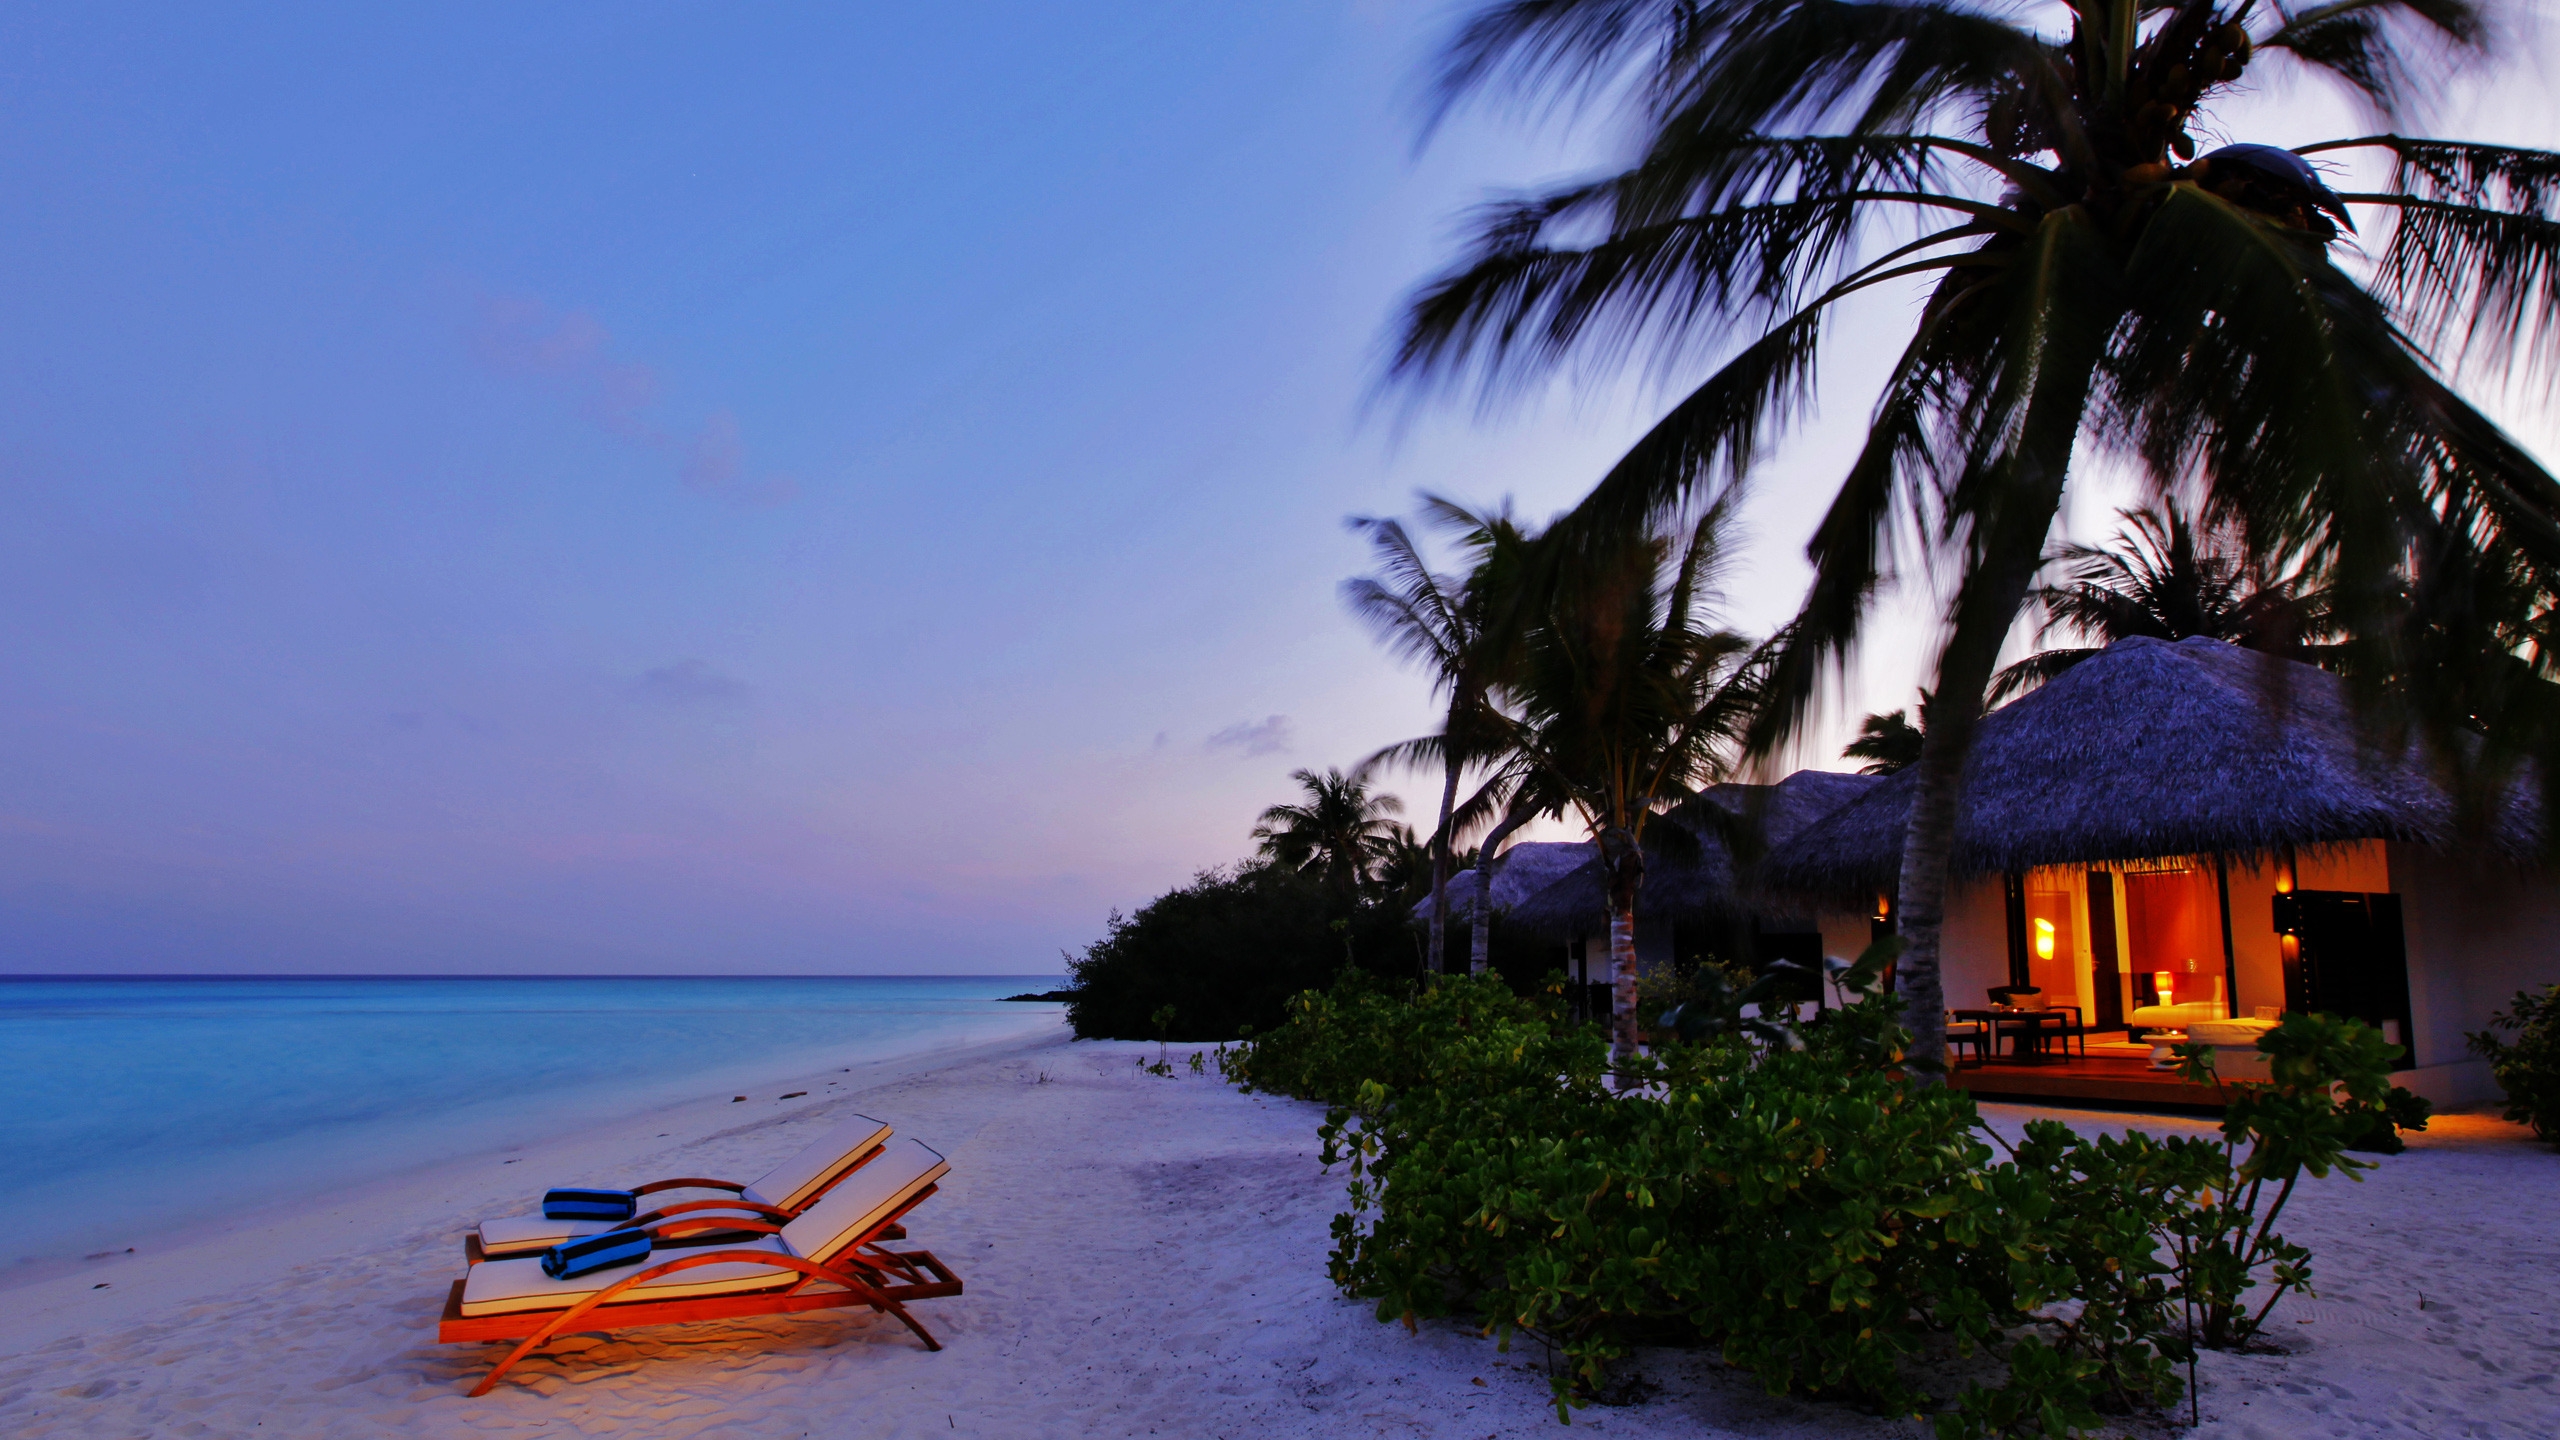 Luxury Beach Resort for 2560x1440 HDTV resolution